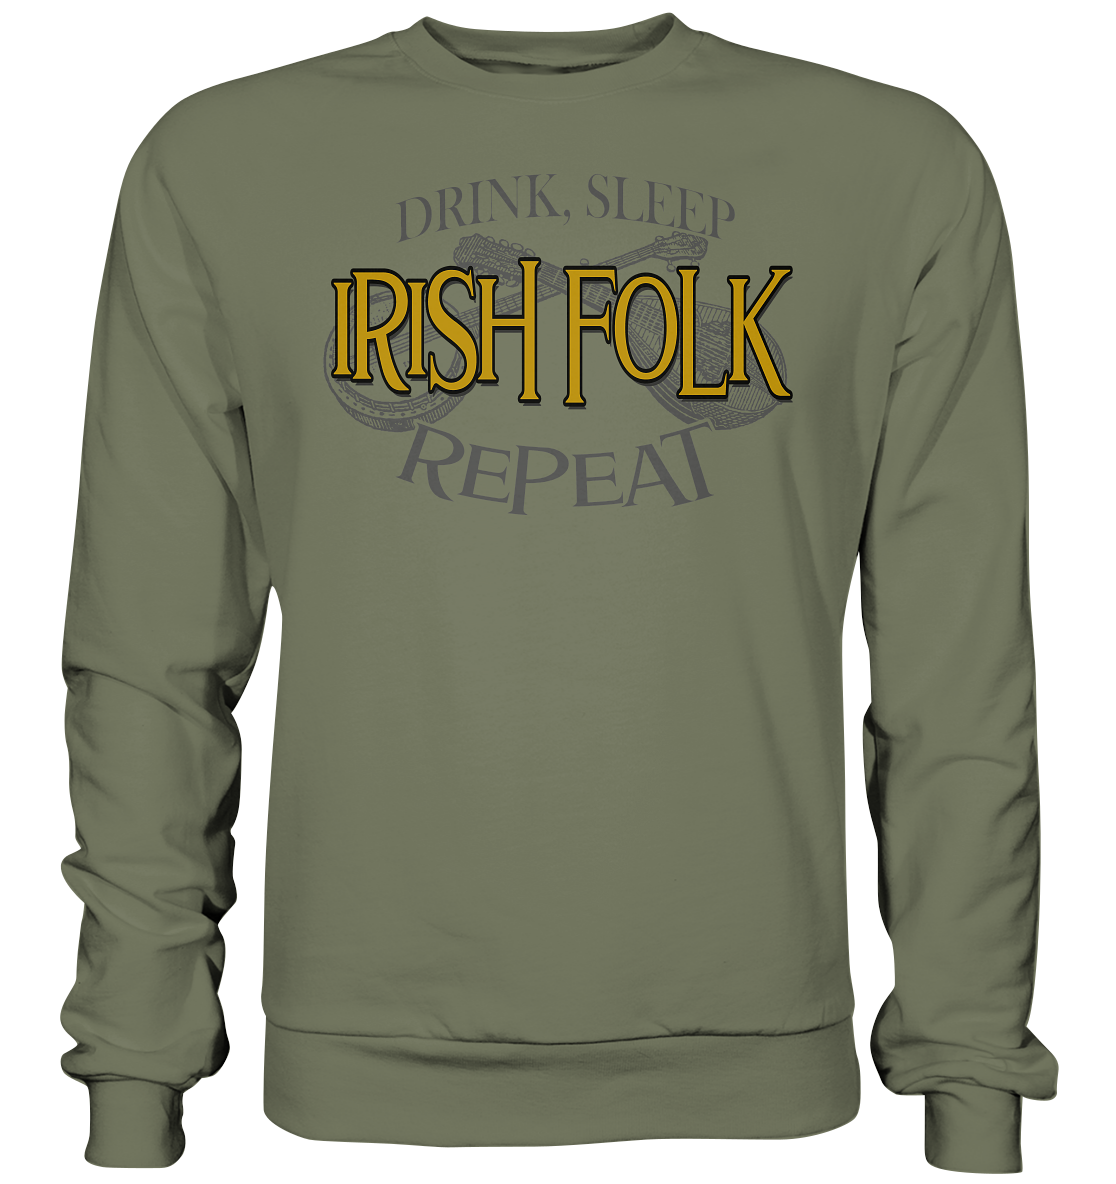 Drink, Sleep "Irish Folk" Repeat - Premium Sweatshirt